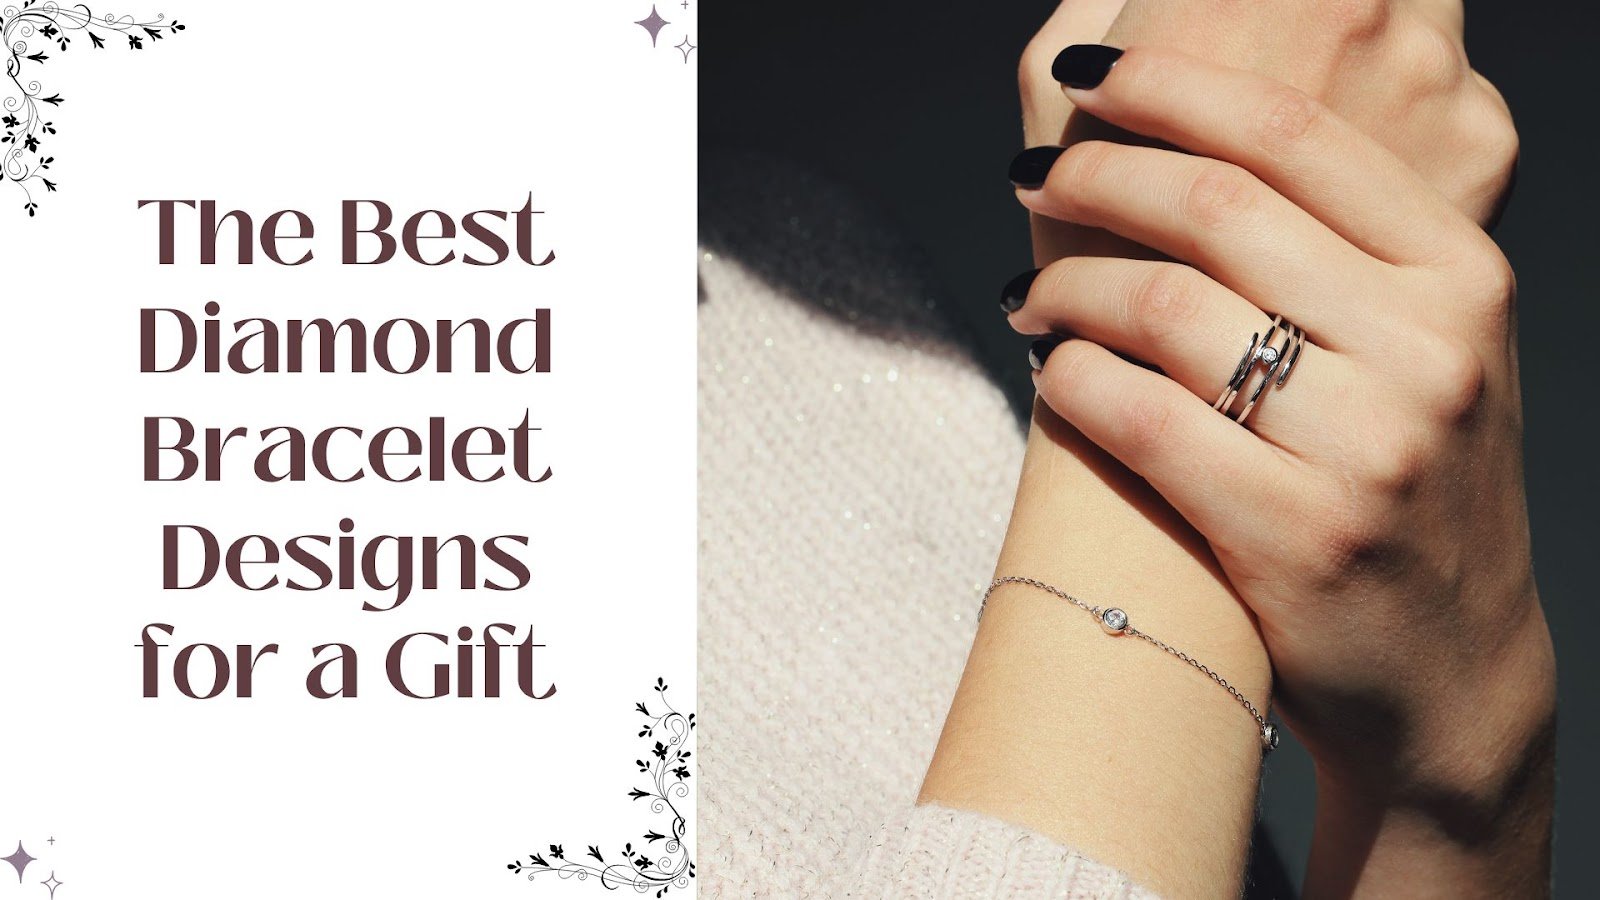 The Best Diamond Bracelet Designs for a Gift